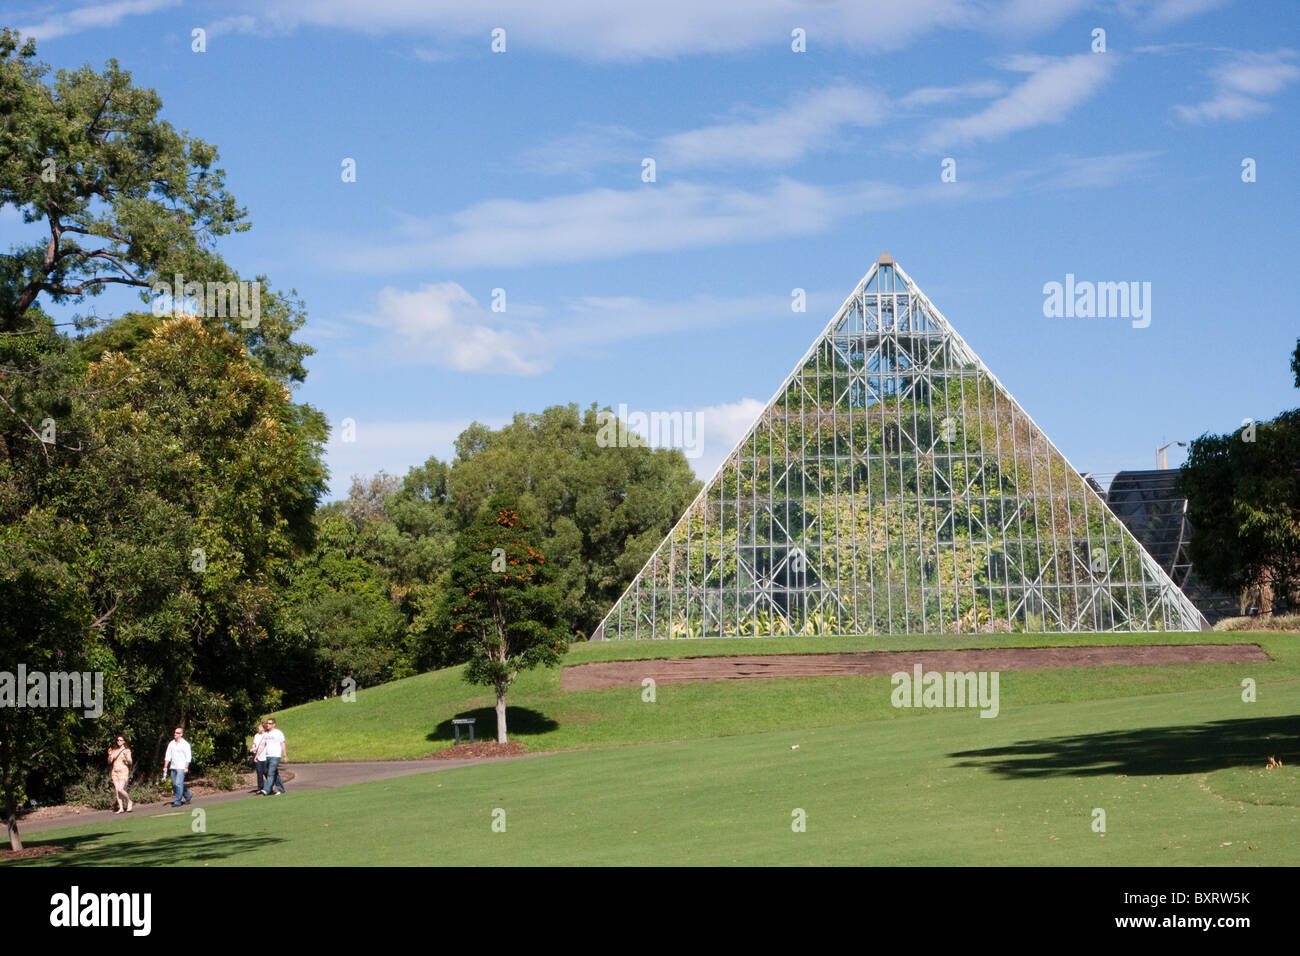 Australia, New South Wales, Sydney, Royal Botanic Gardens, People walking near pyramid shaped greenhouse Stock Photo